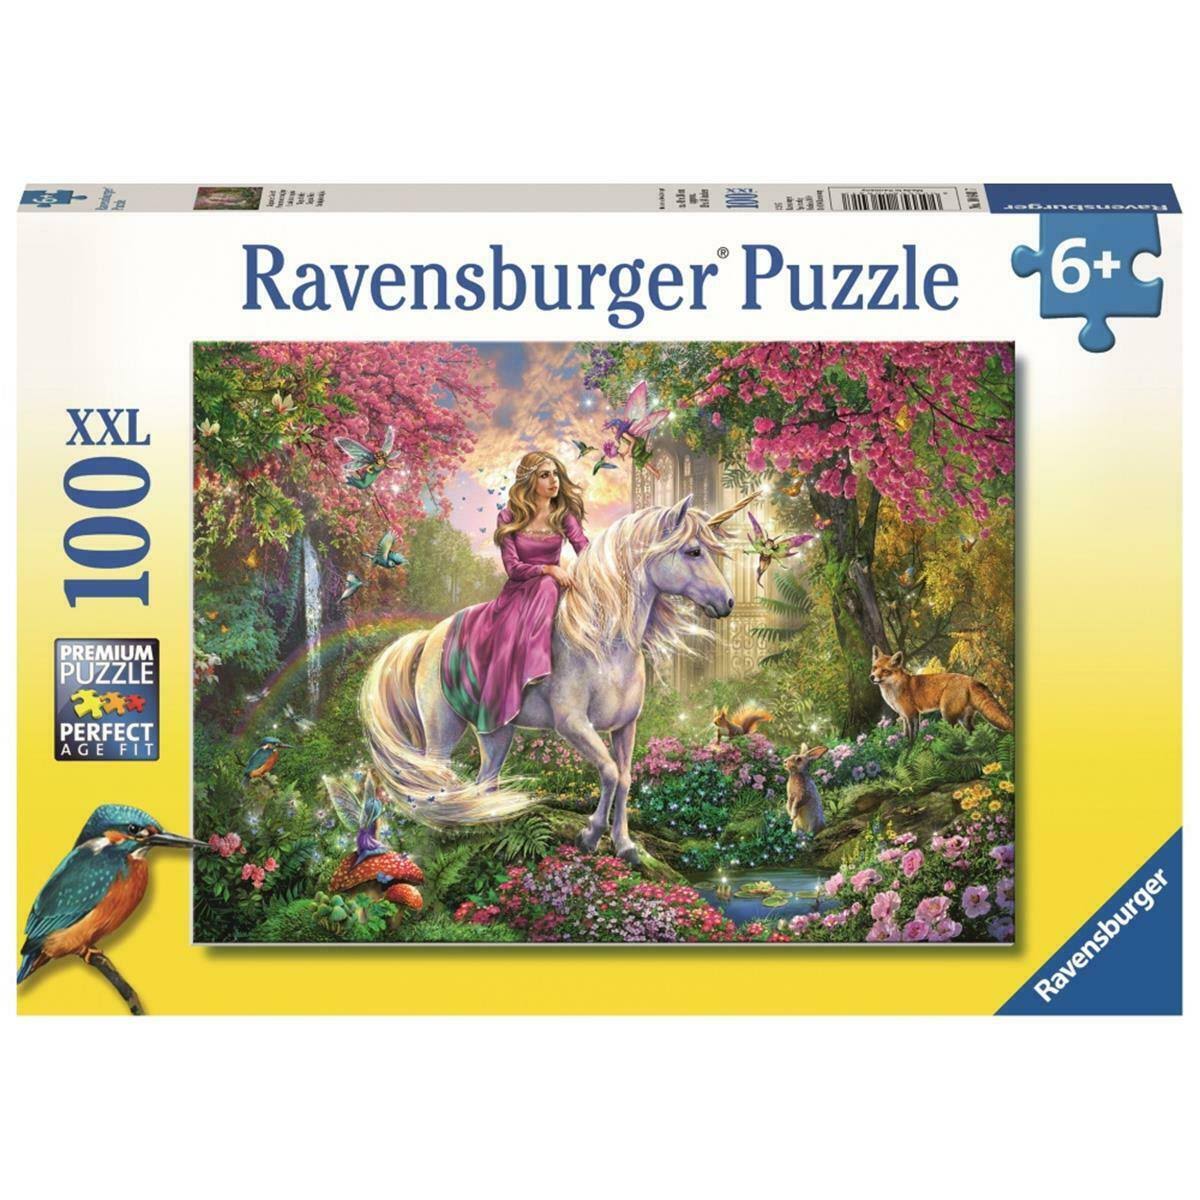 Ravensburger Jigsaw Puzzle Unicorn XXL 100 Pieces